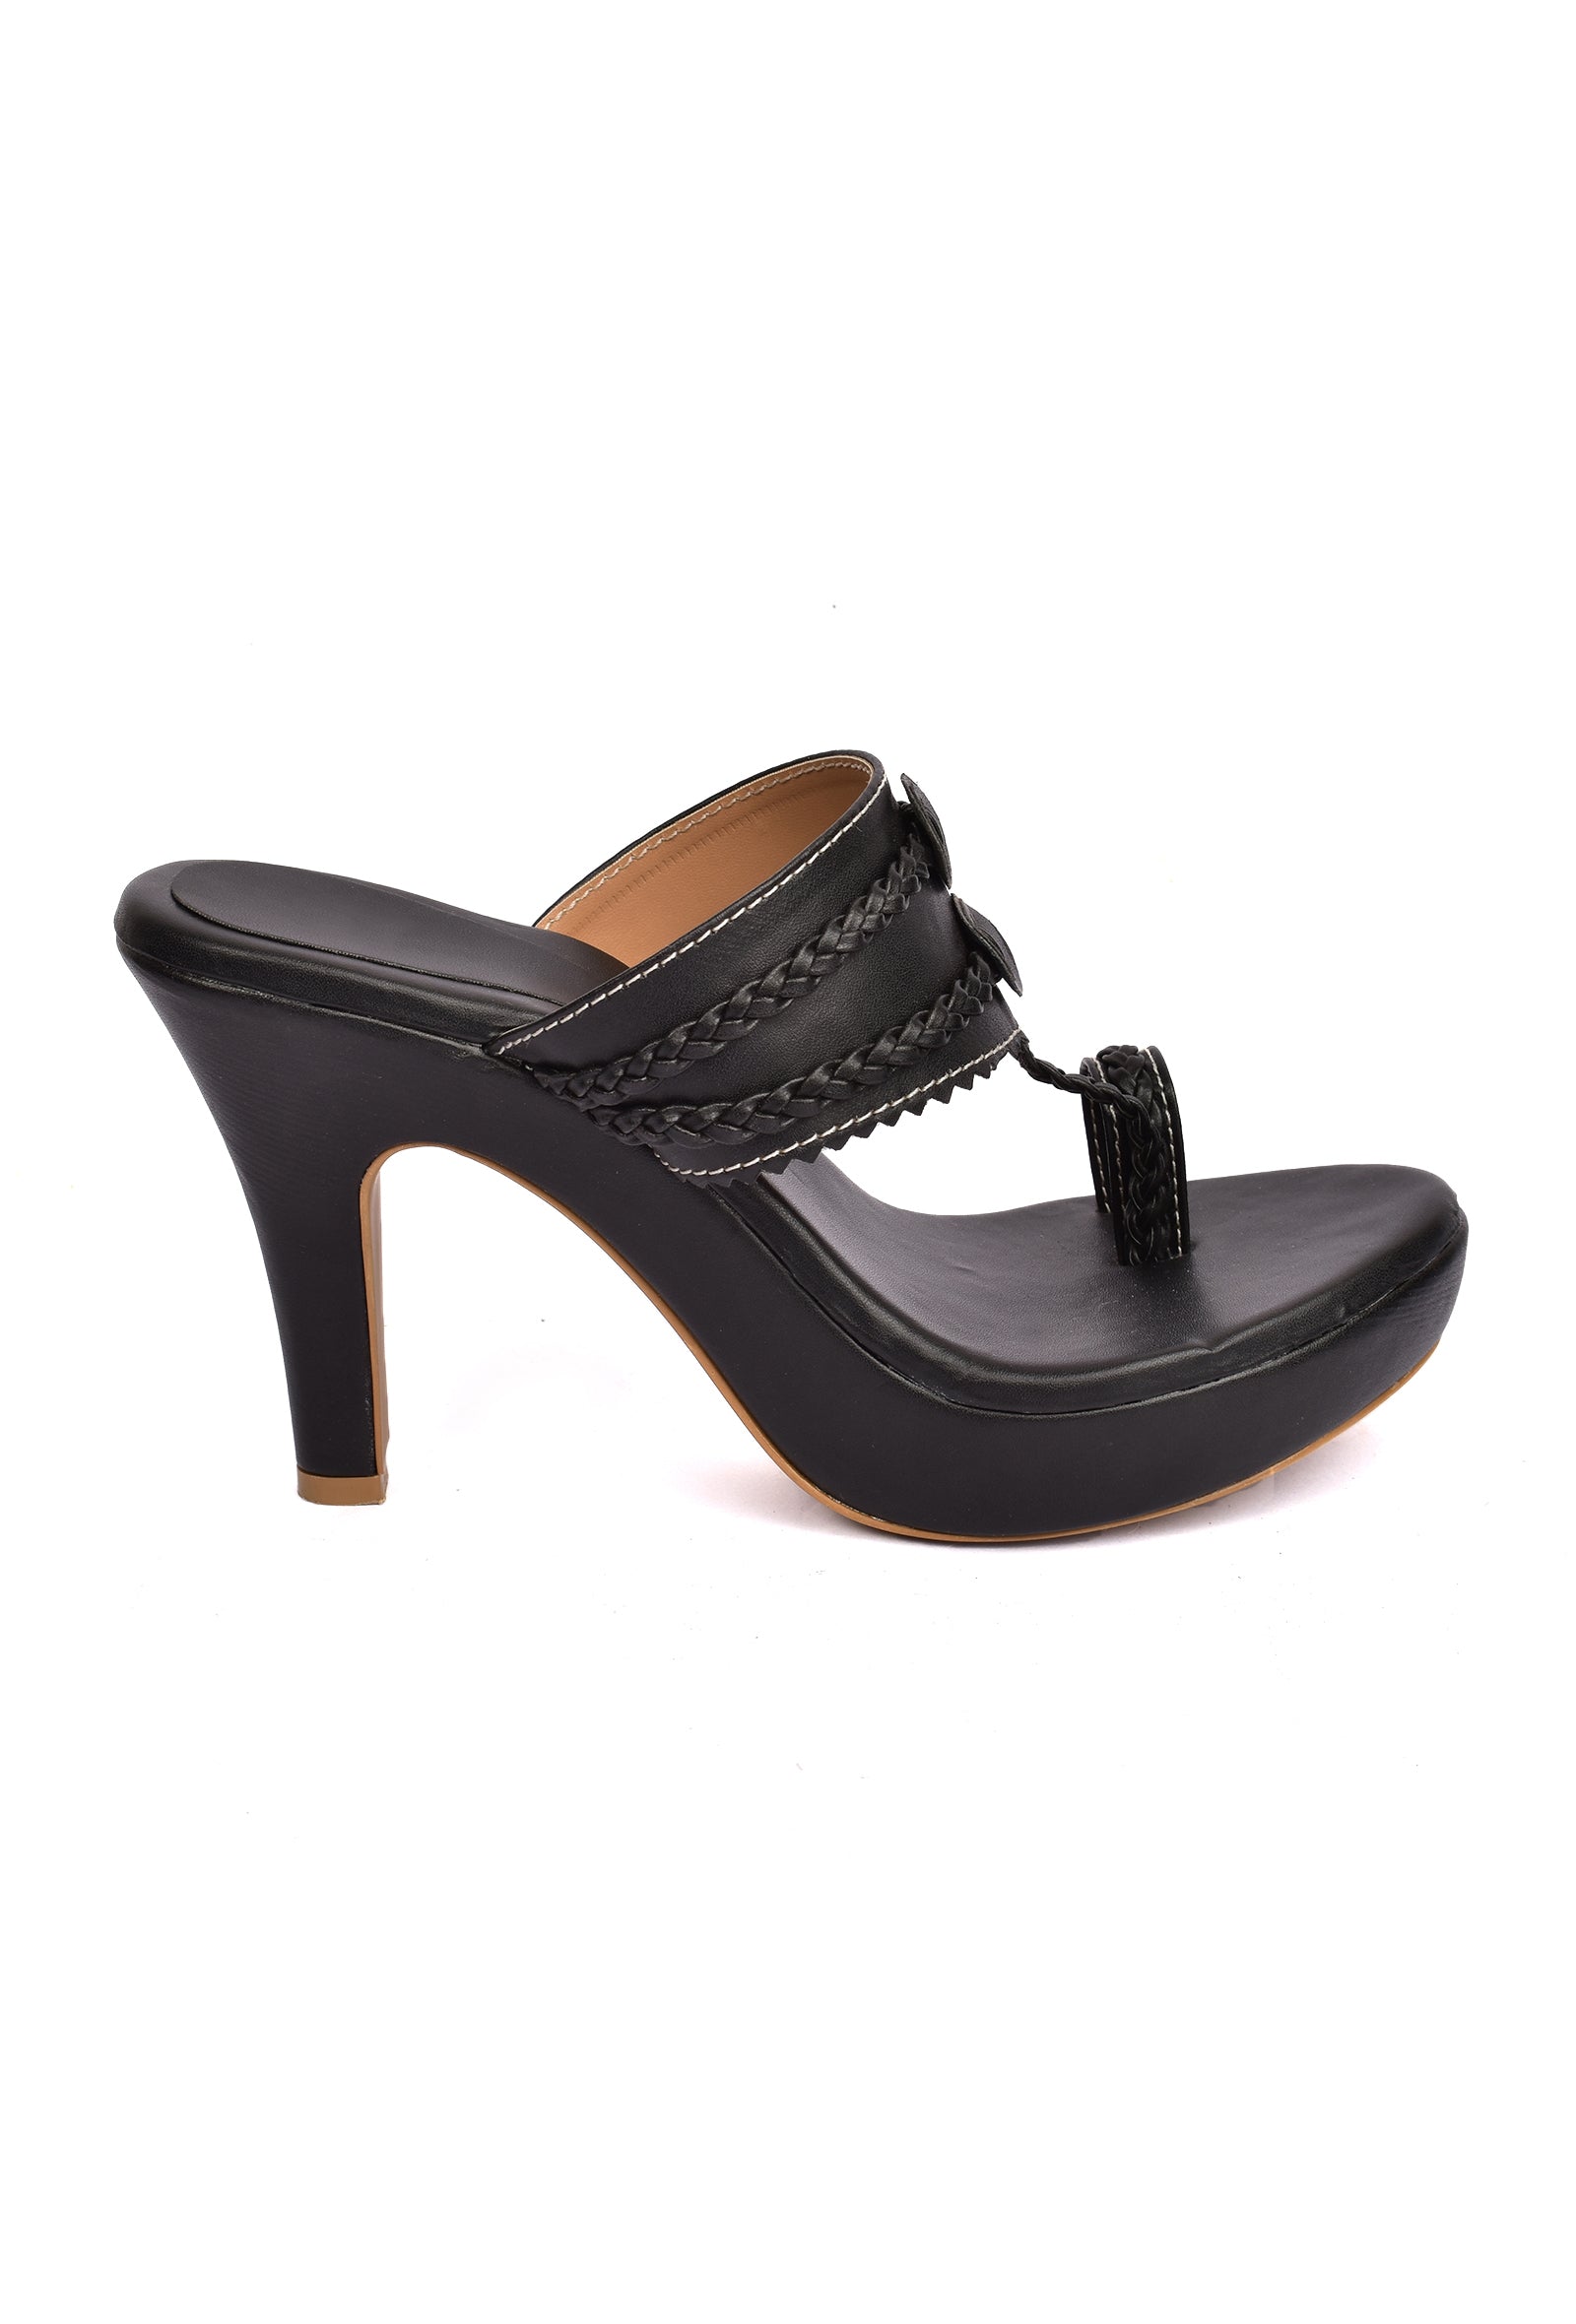 Buy Handcrafted Footwear for Men & Women Online at Jaypore.com | Fashion  shoes sandals, Elegant shoes heels, Leather block heels